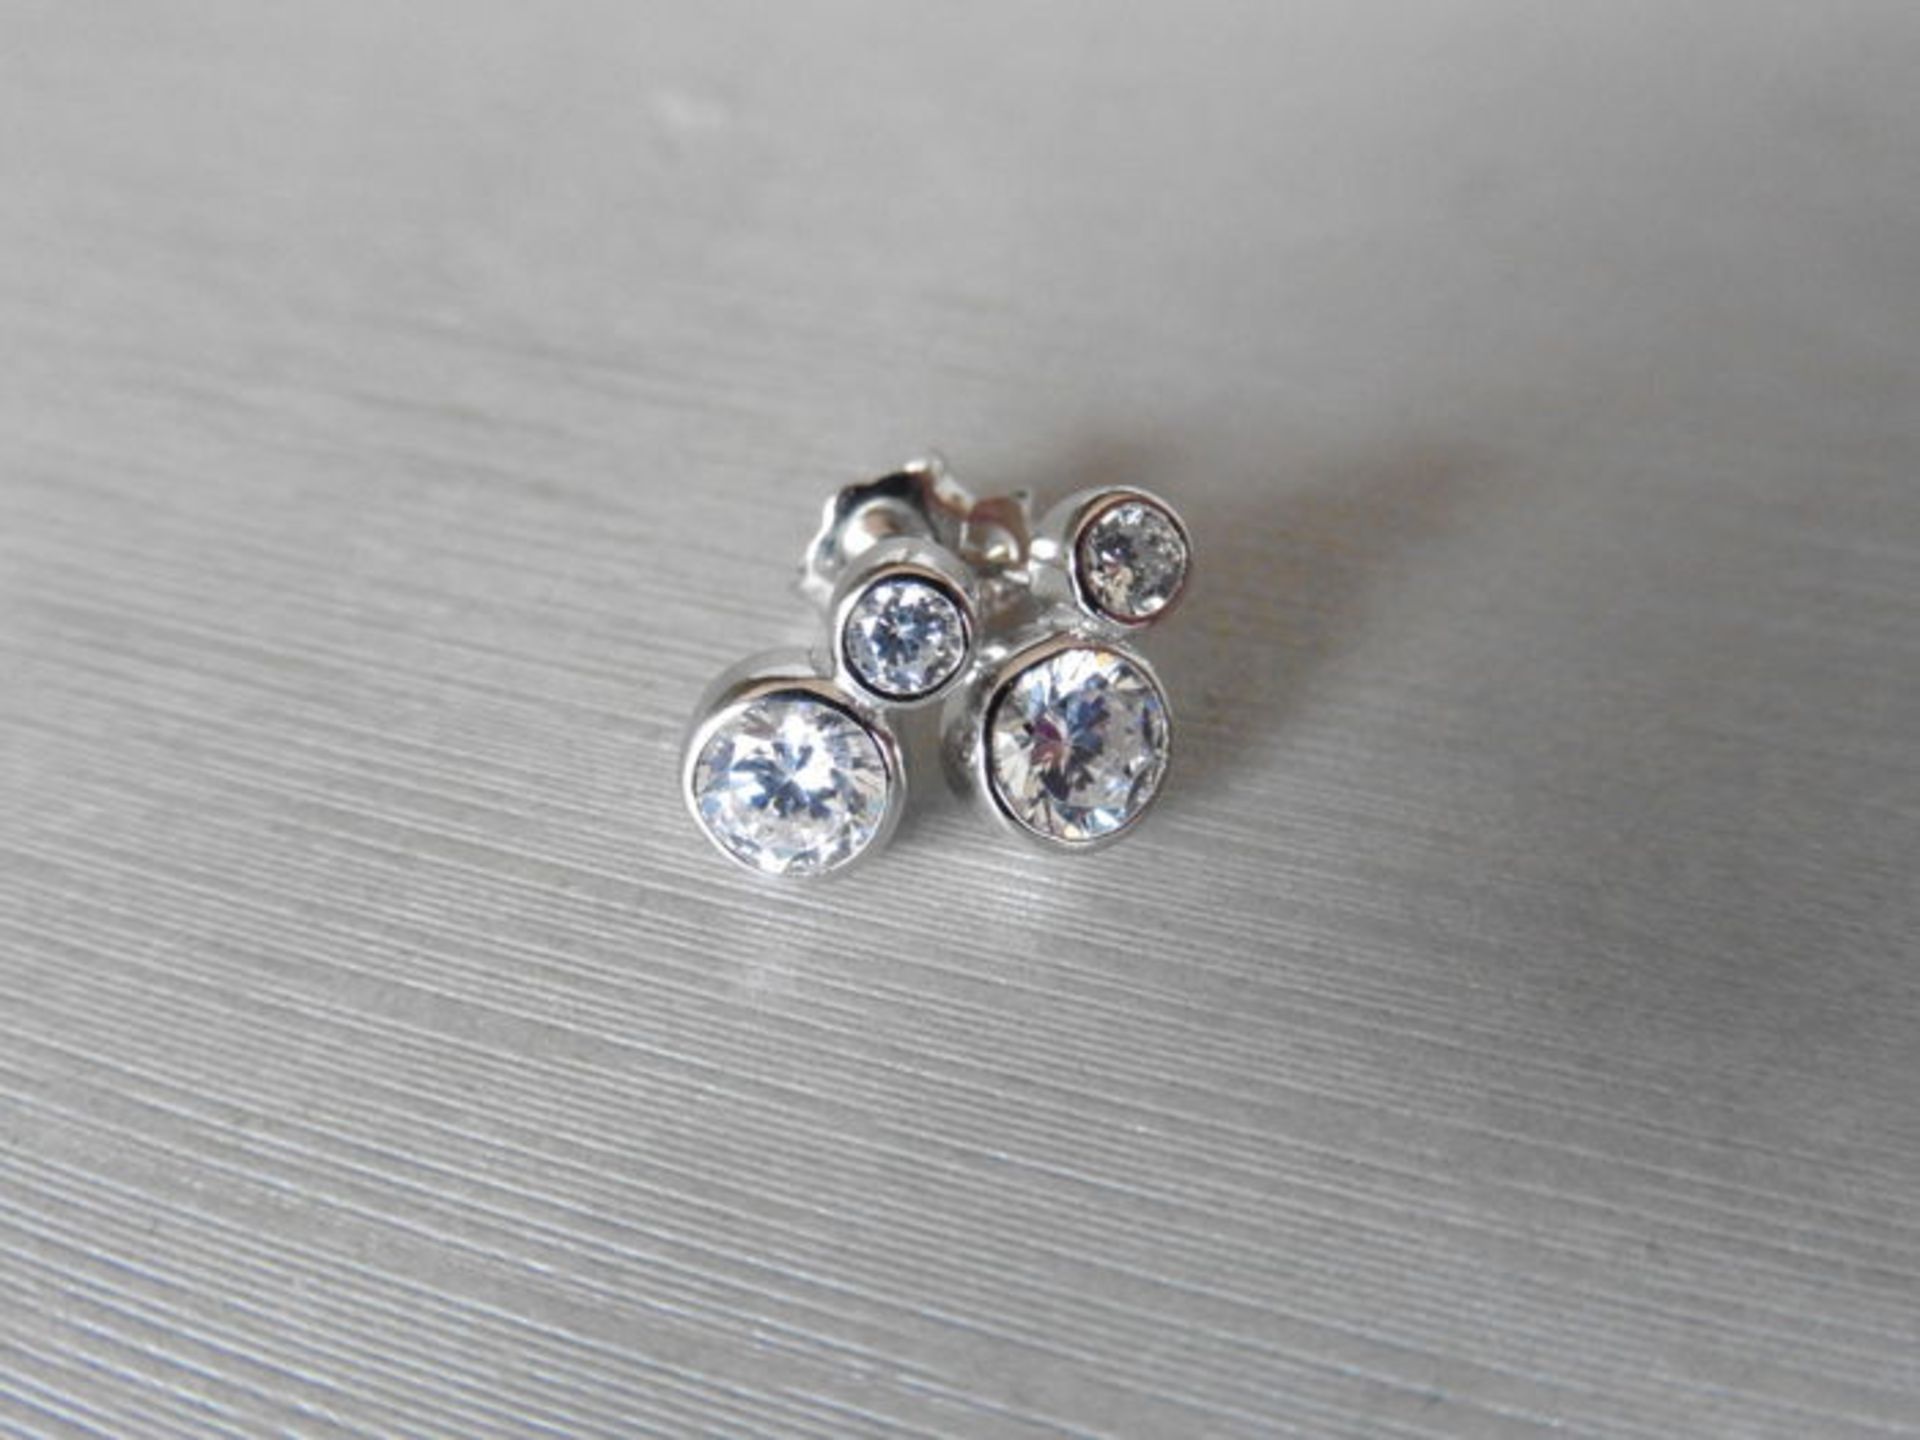 0.80ct diamond drop earrings each set with 2 graduated brilliant cut diamonds, I/J colour, si2 - Image 2 of 3